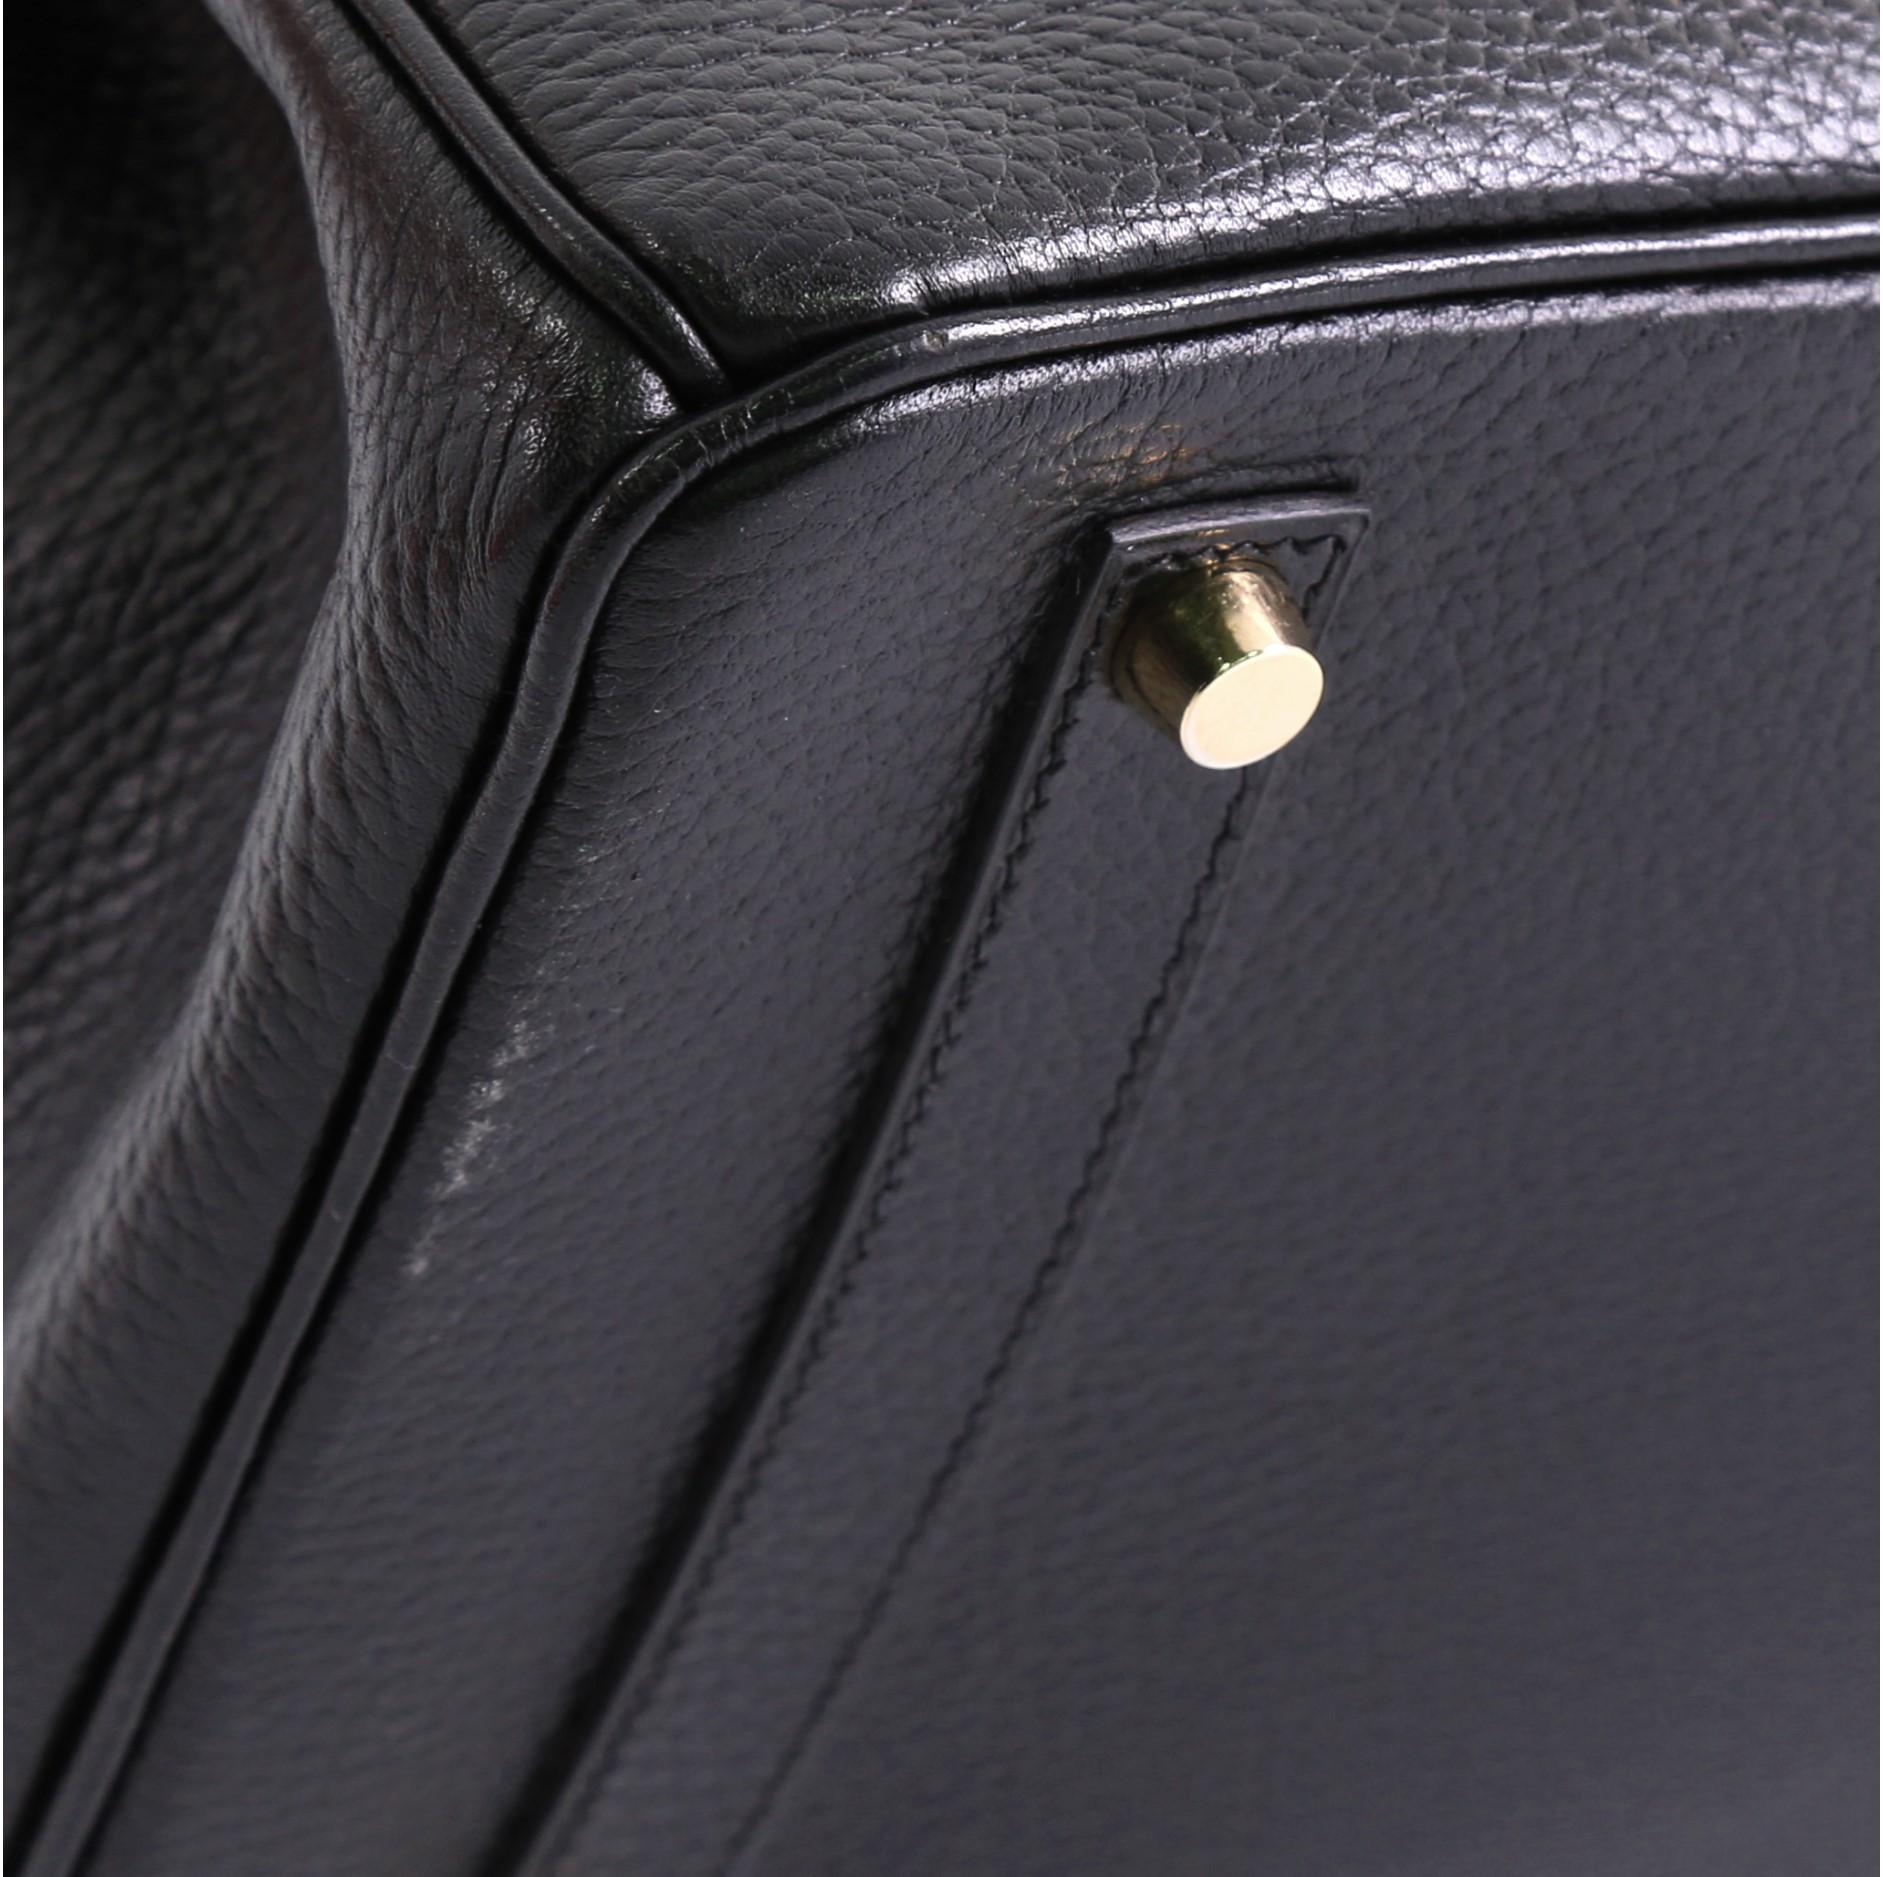 Hermes Birkin Handbag Noir Ardennes with Gold Hardware 35 2